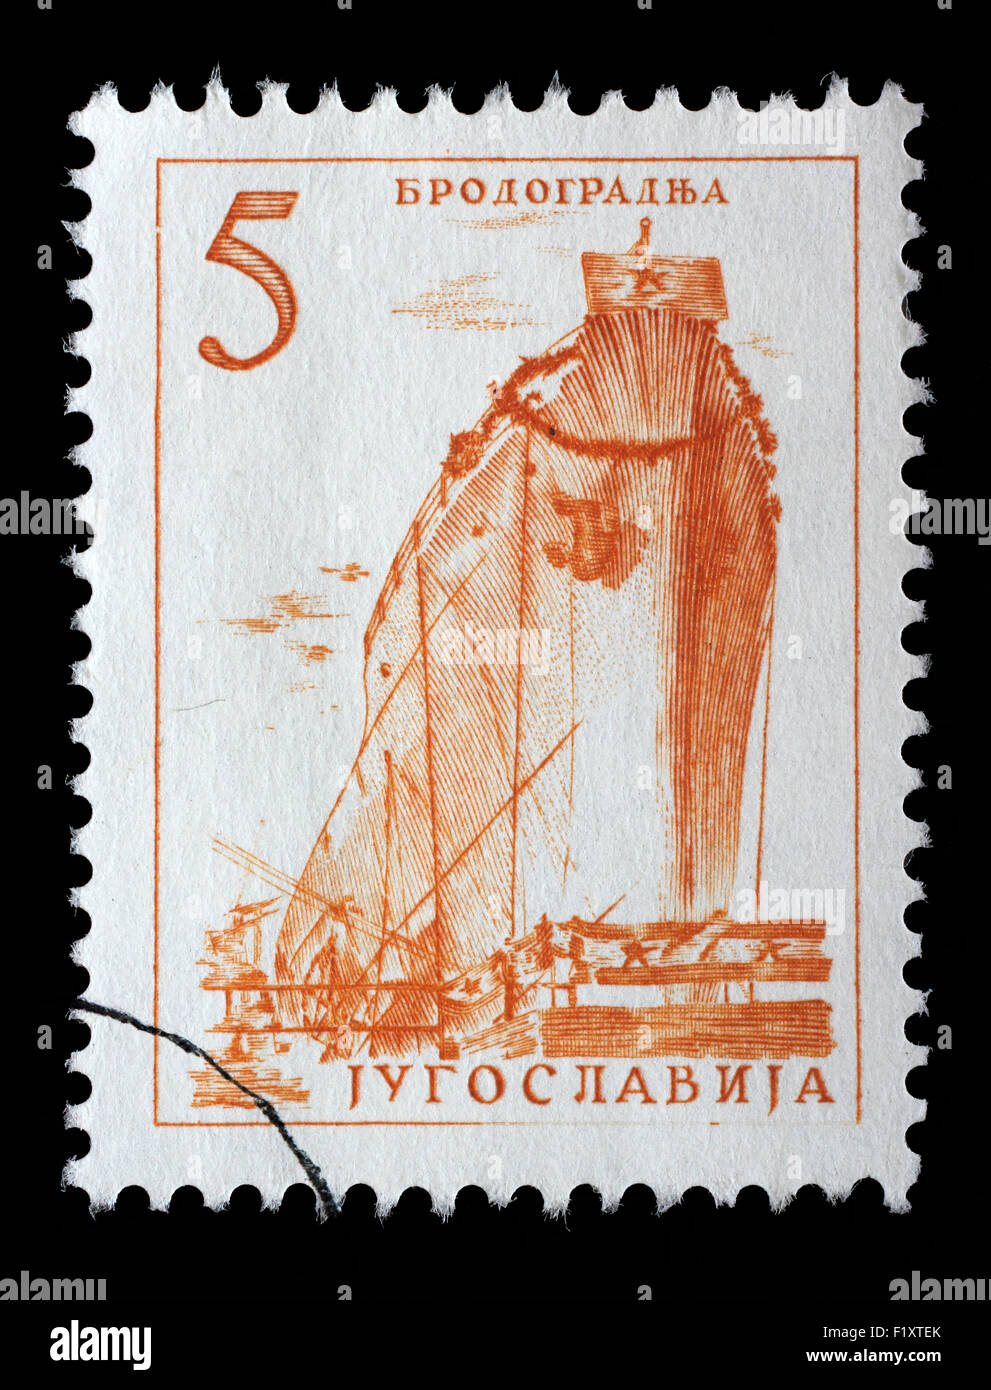 Stamp printed by Yugoslavia, shows a ship in a shipyard, series, circa 1958 Stock Photo